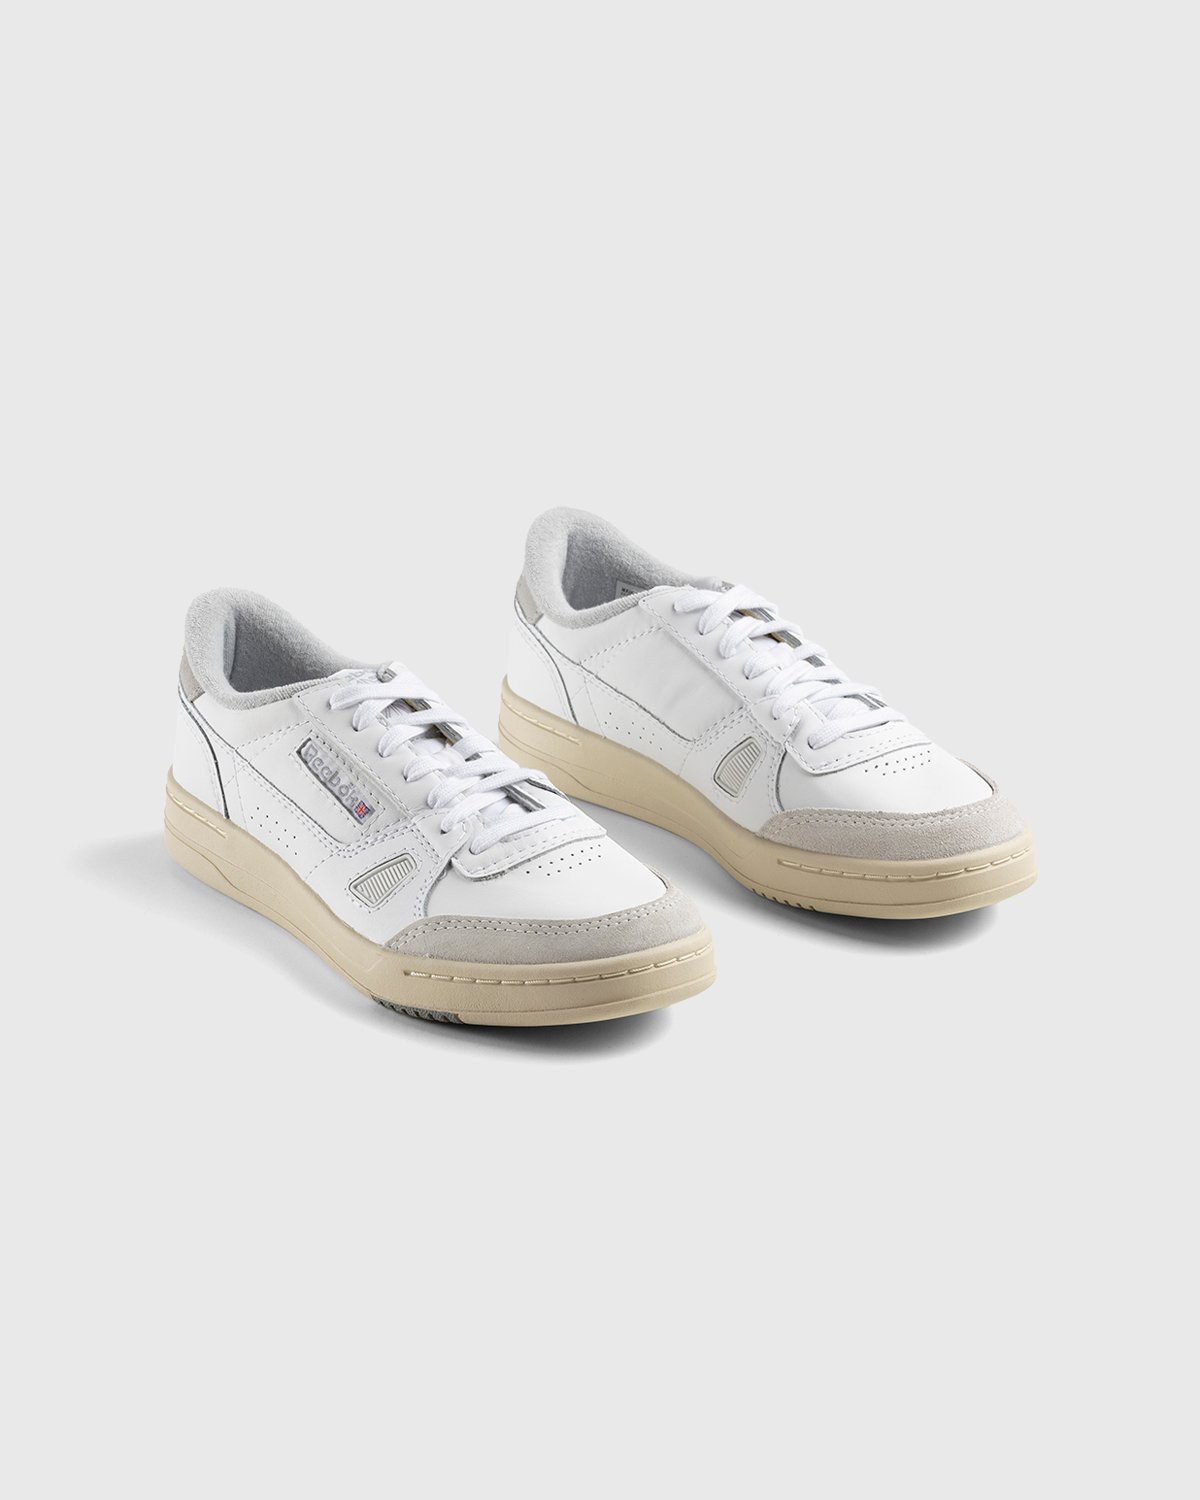 Reebok - LT Court Cloud White / Pure Grey 3 / Alabaster - Footwear - White - Image 3